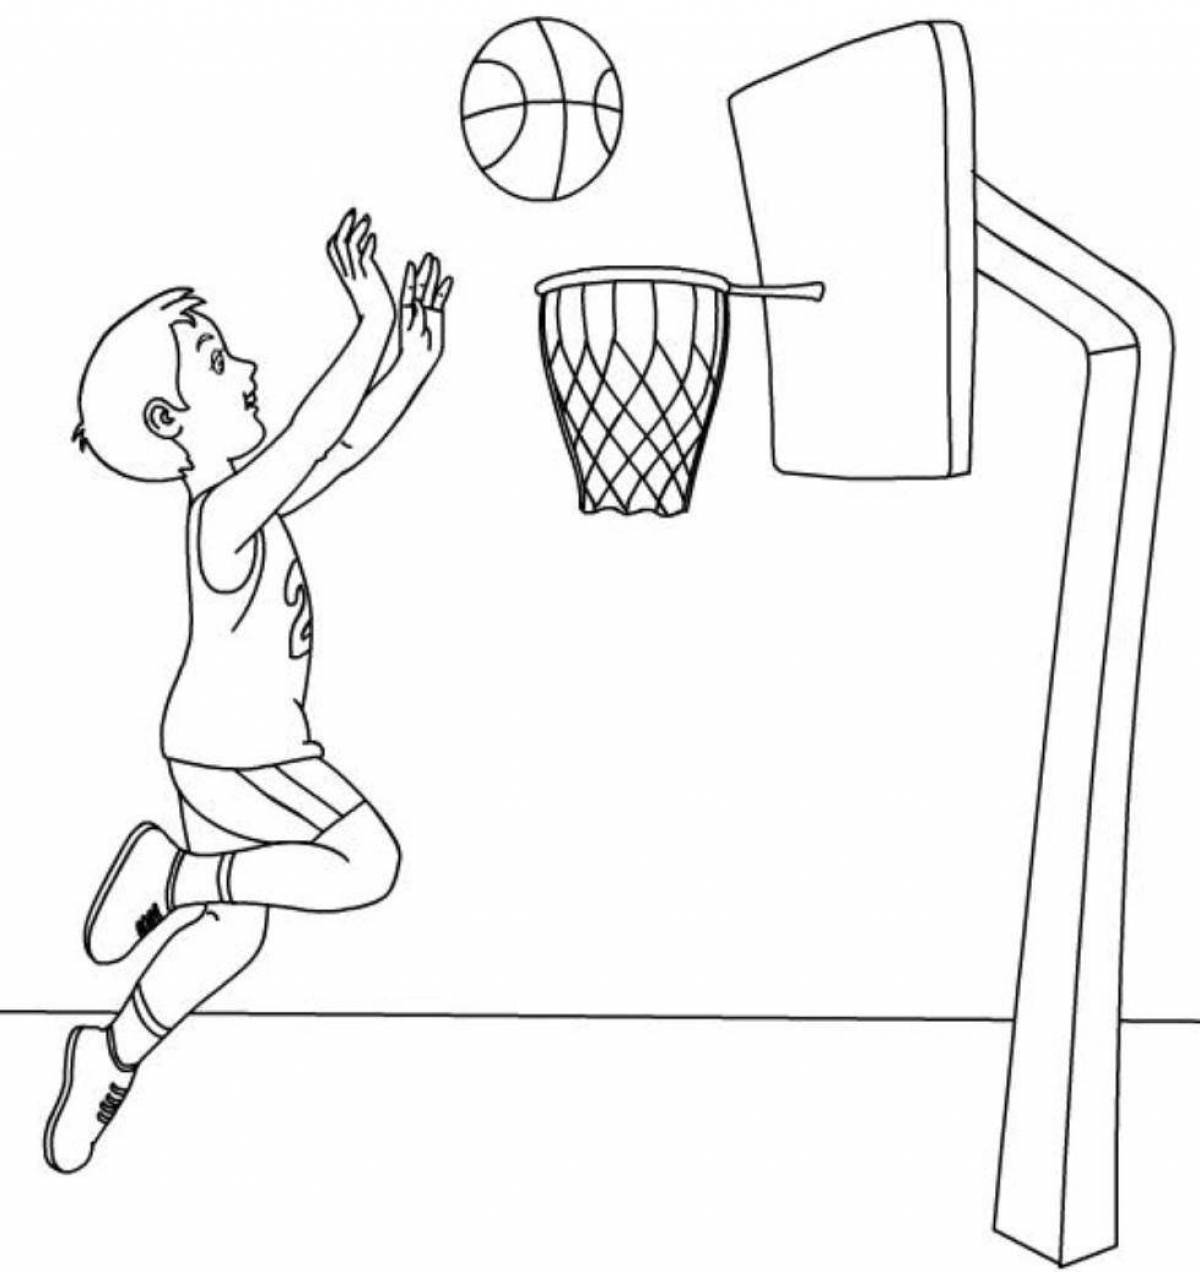 Fun basketball hoop coloring page